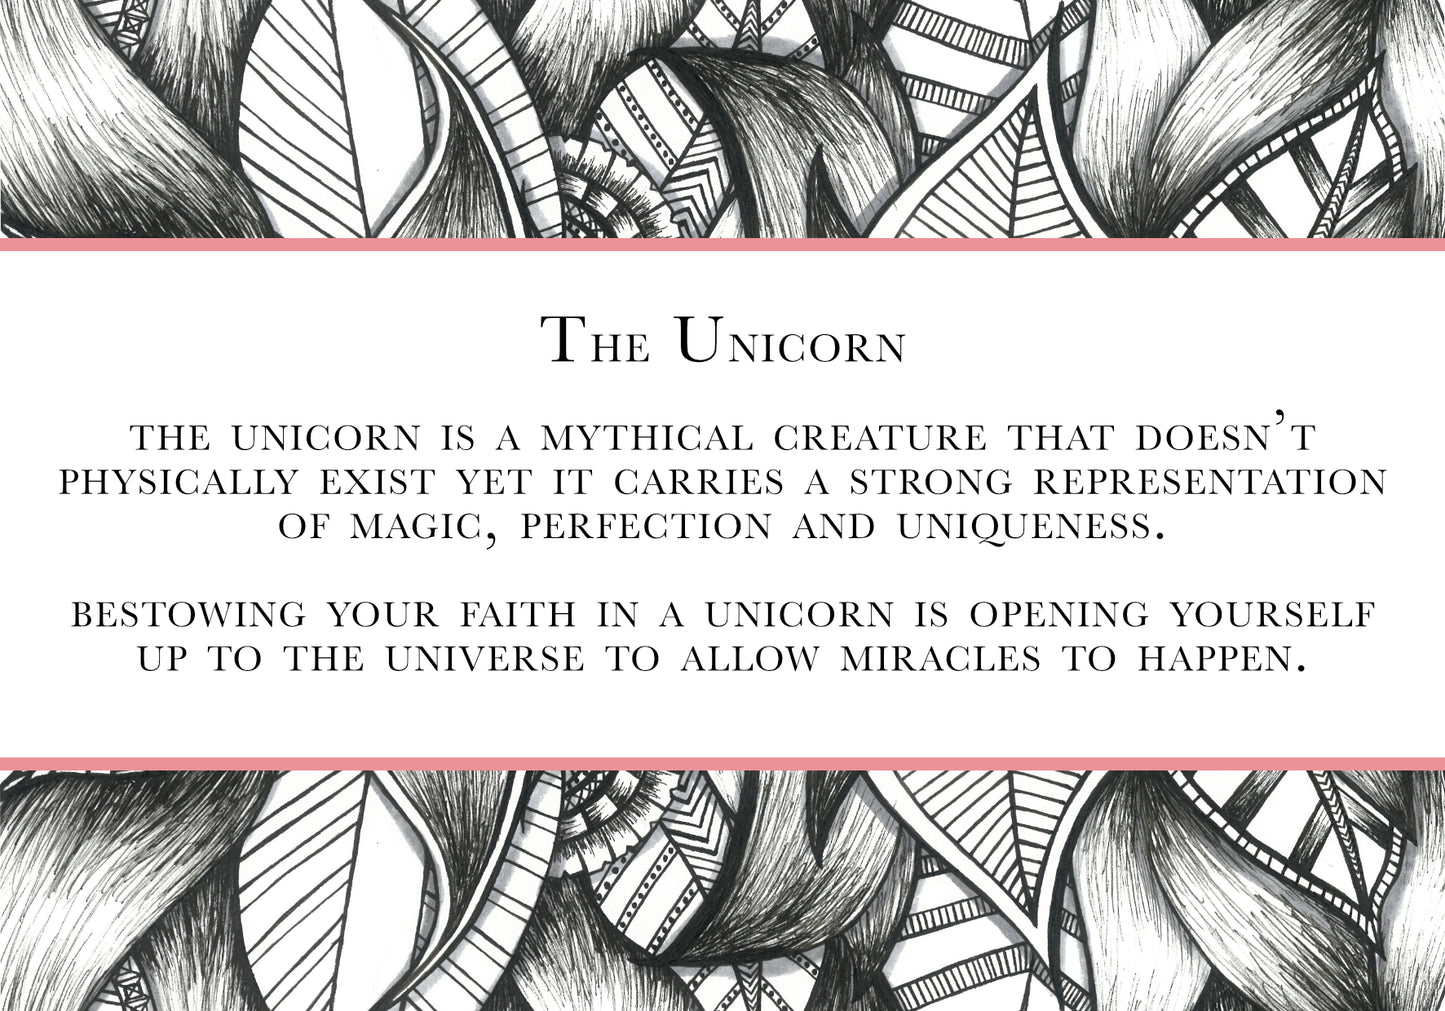 The Unicorn (PRINT)